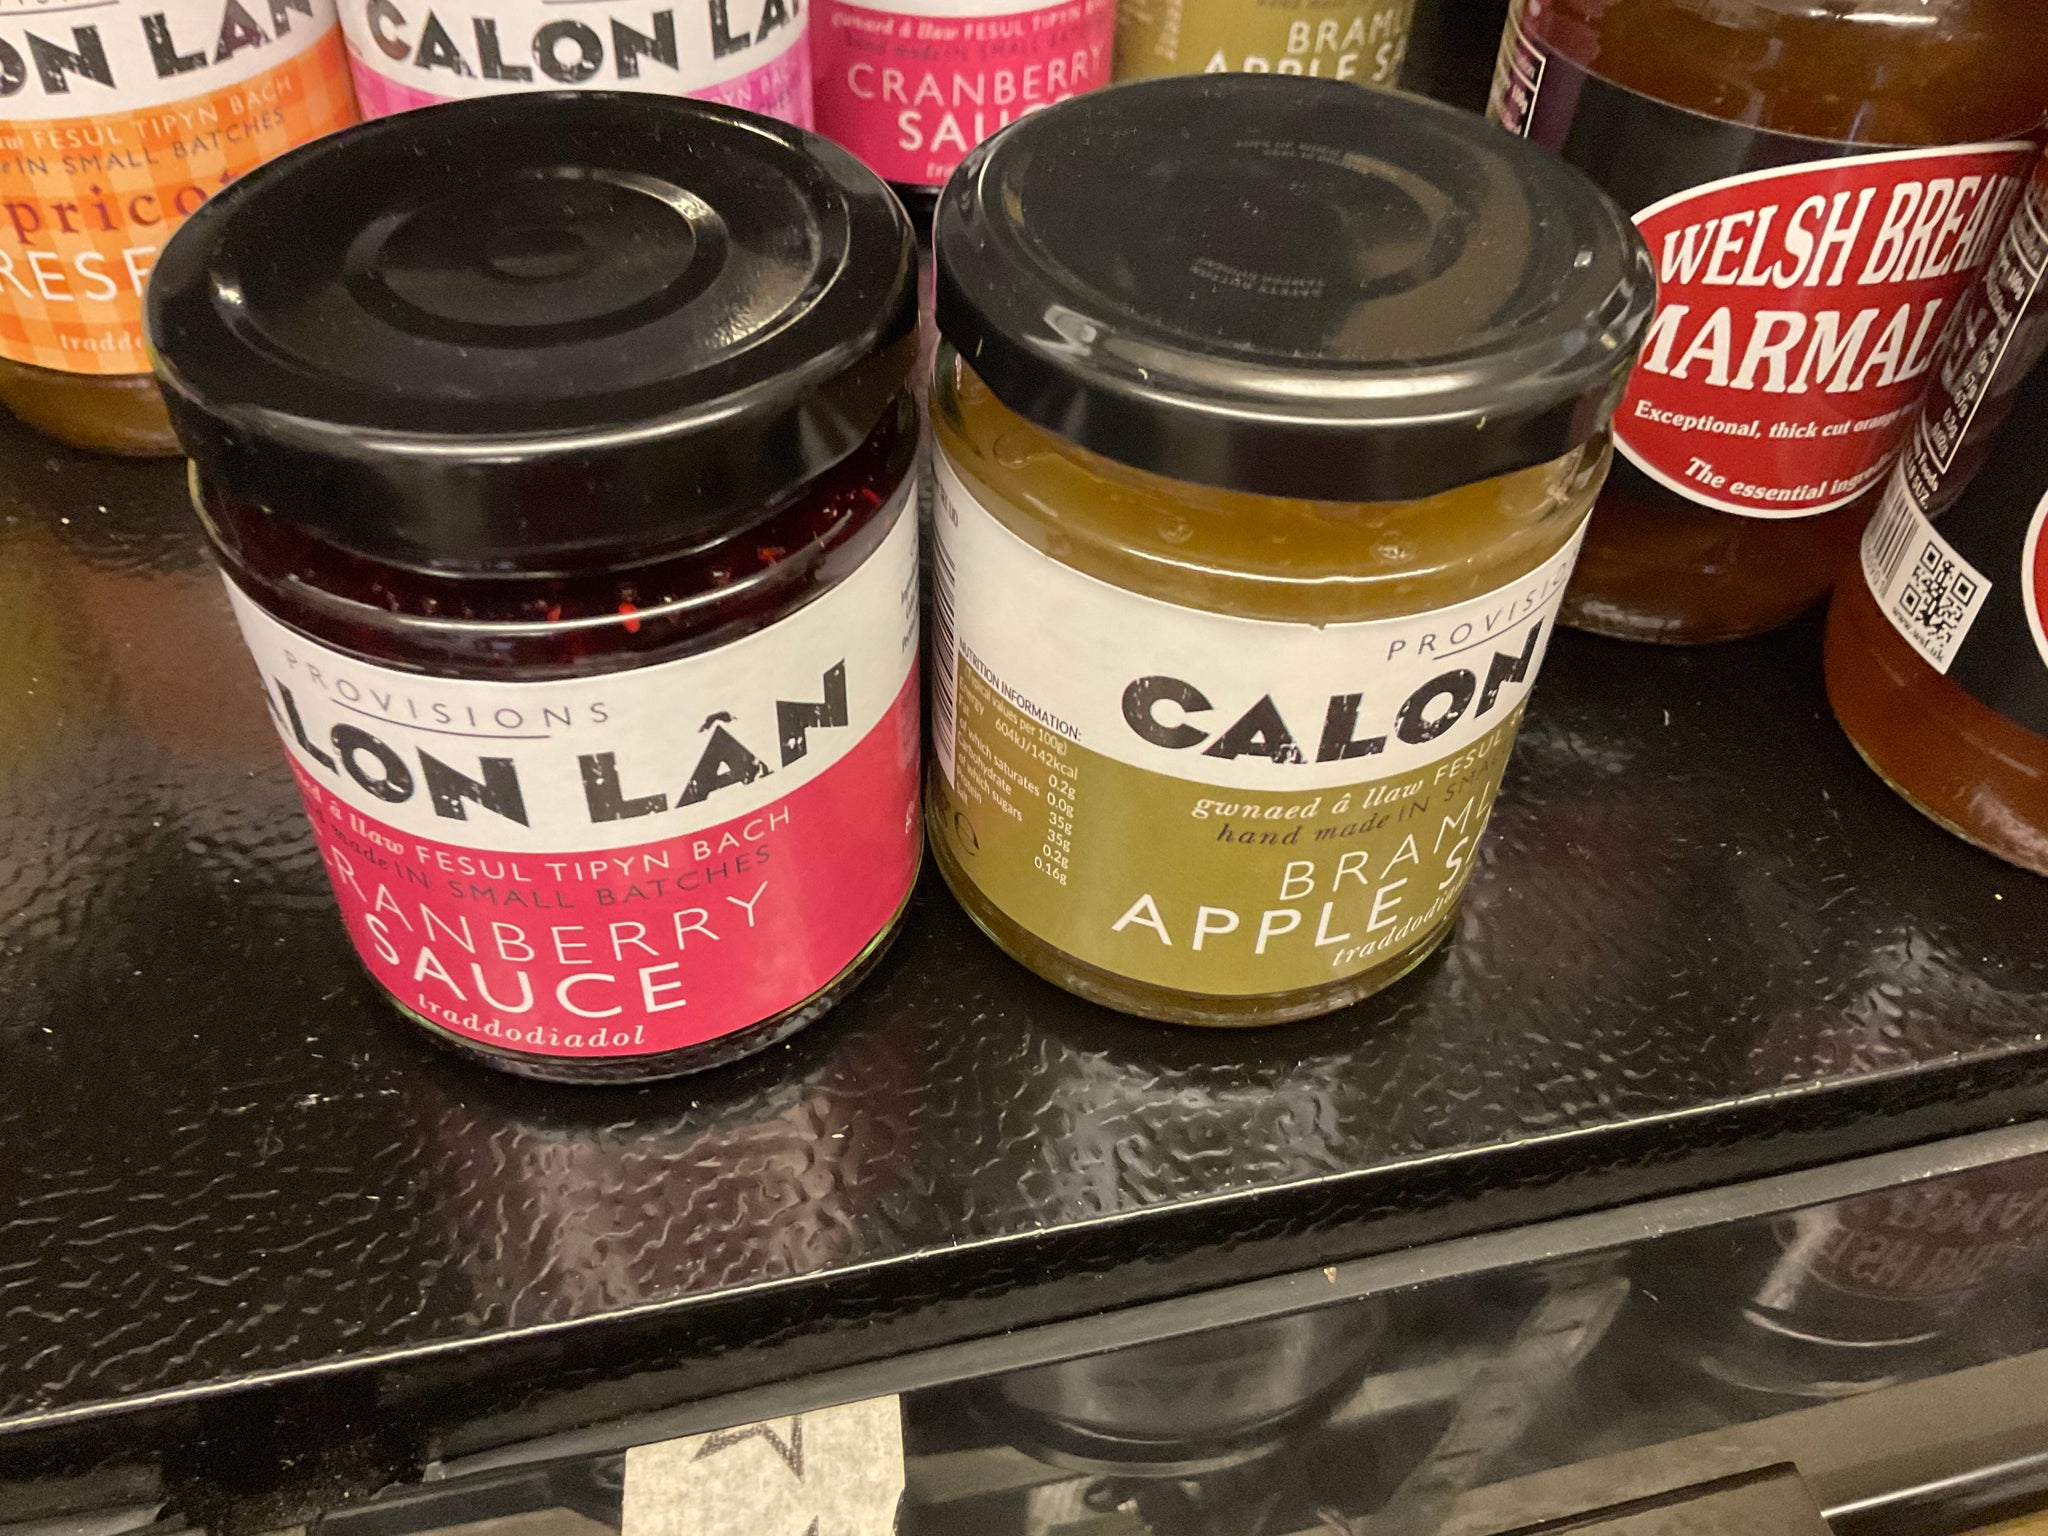 Calon Lan Apple chutney